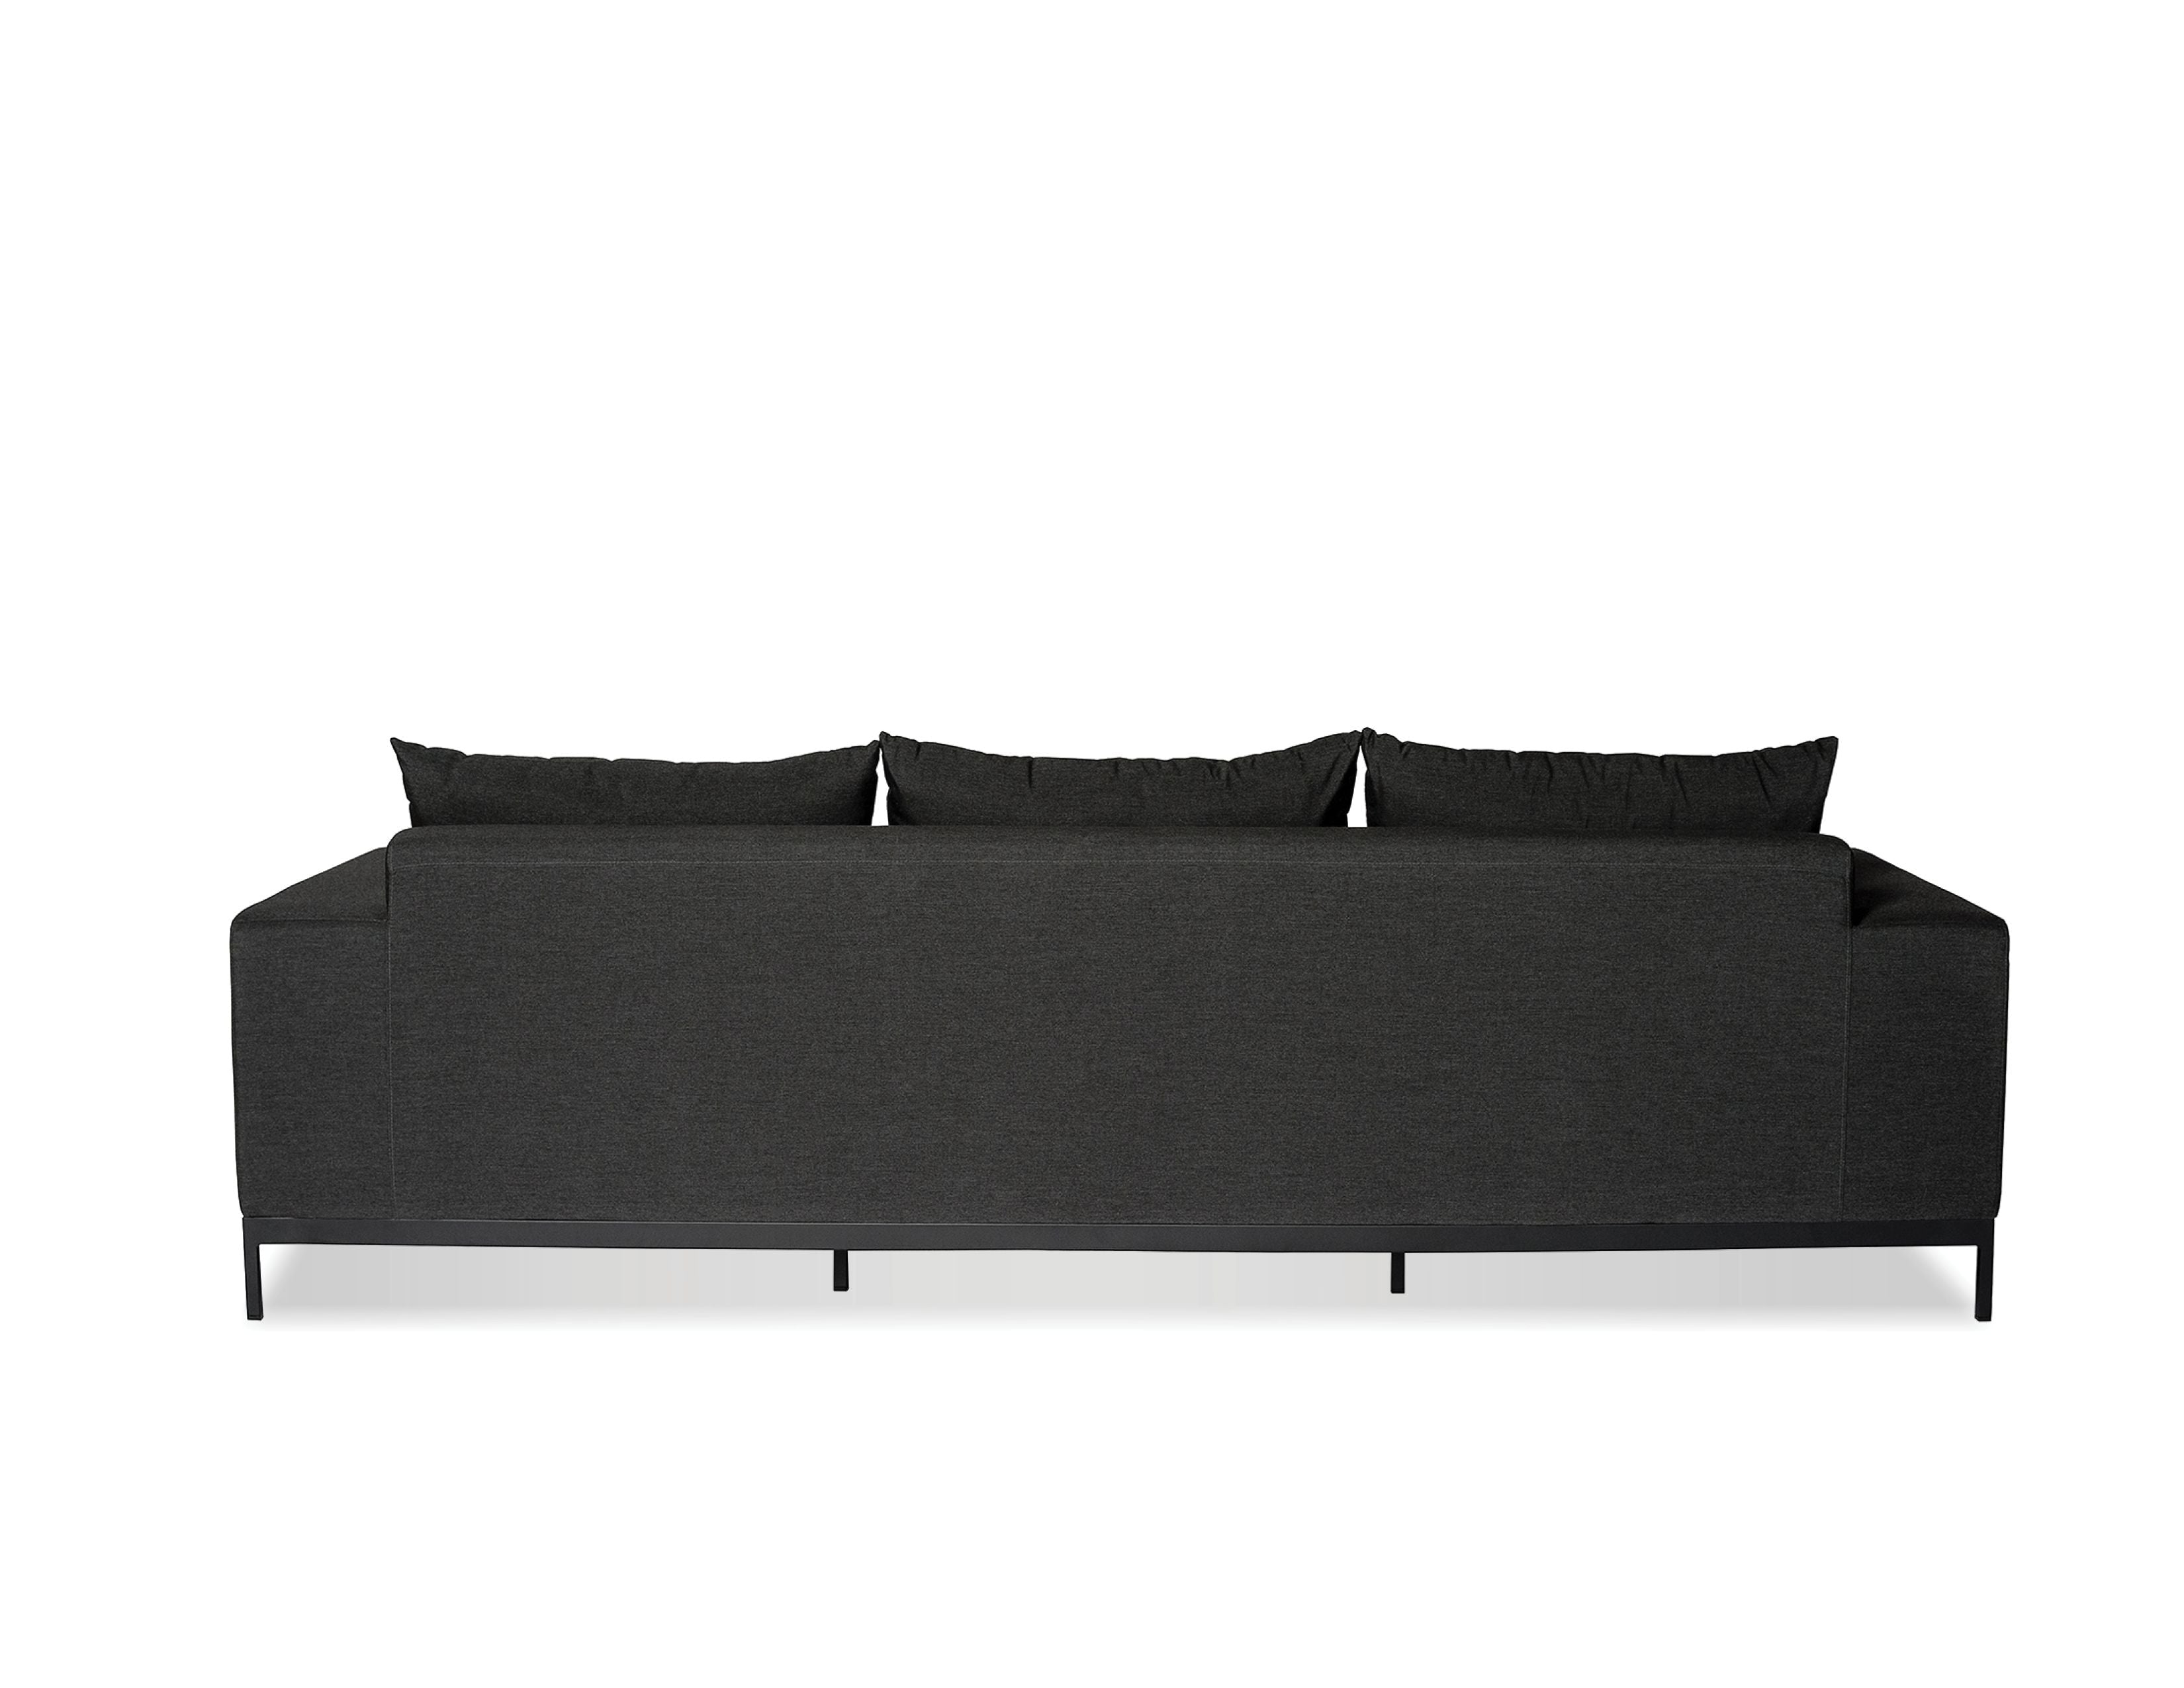 JERICHO Fabric Sofa in Charcoal